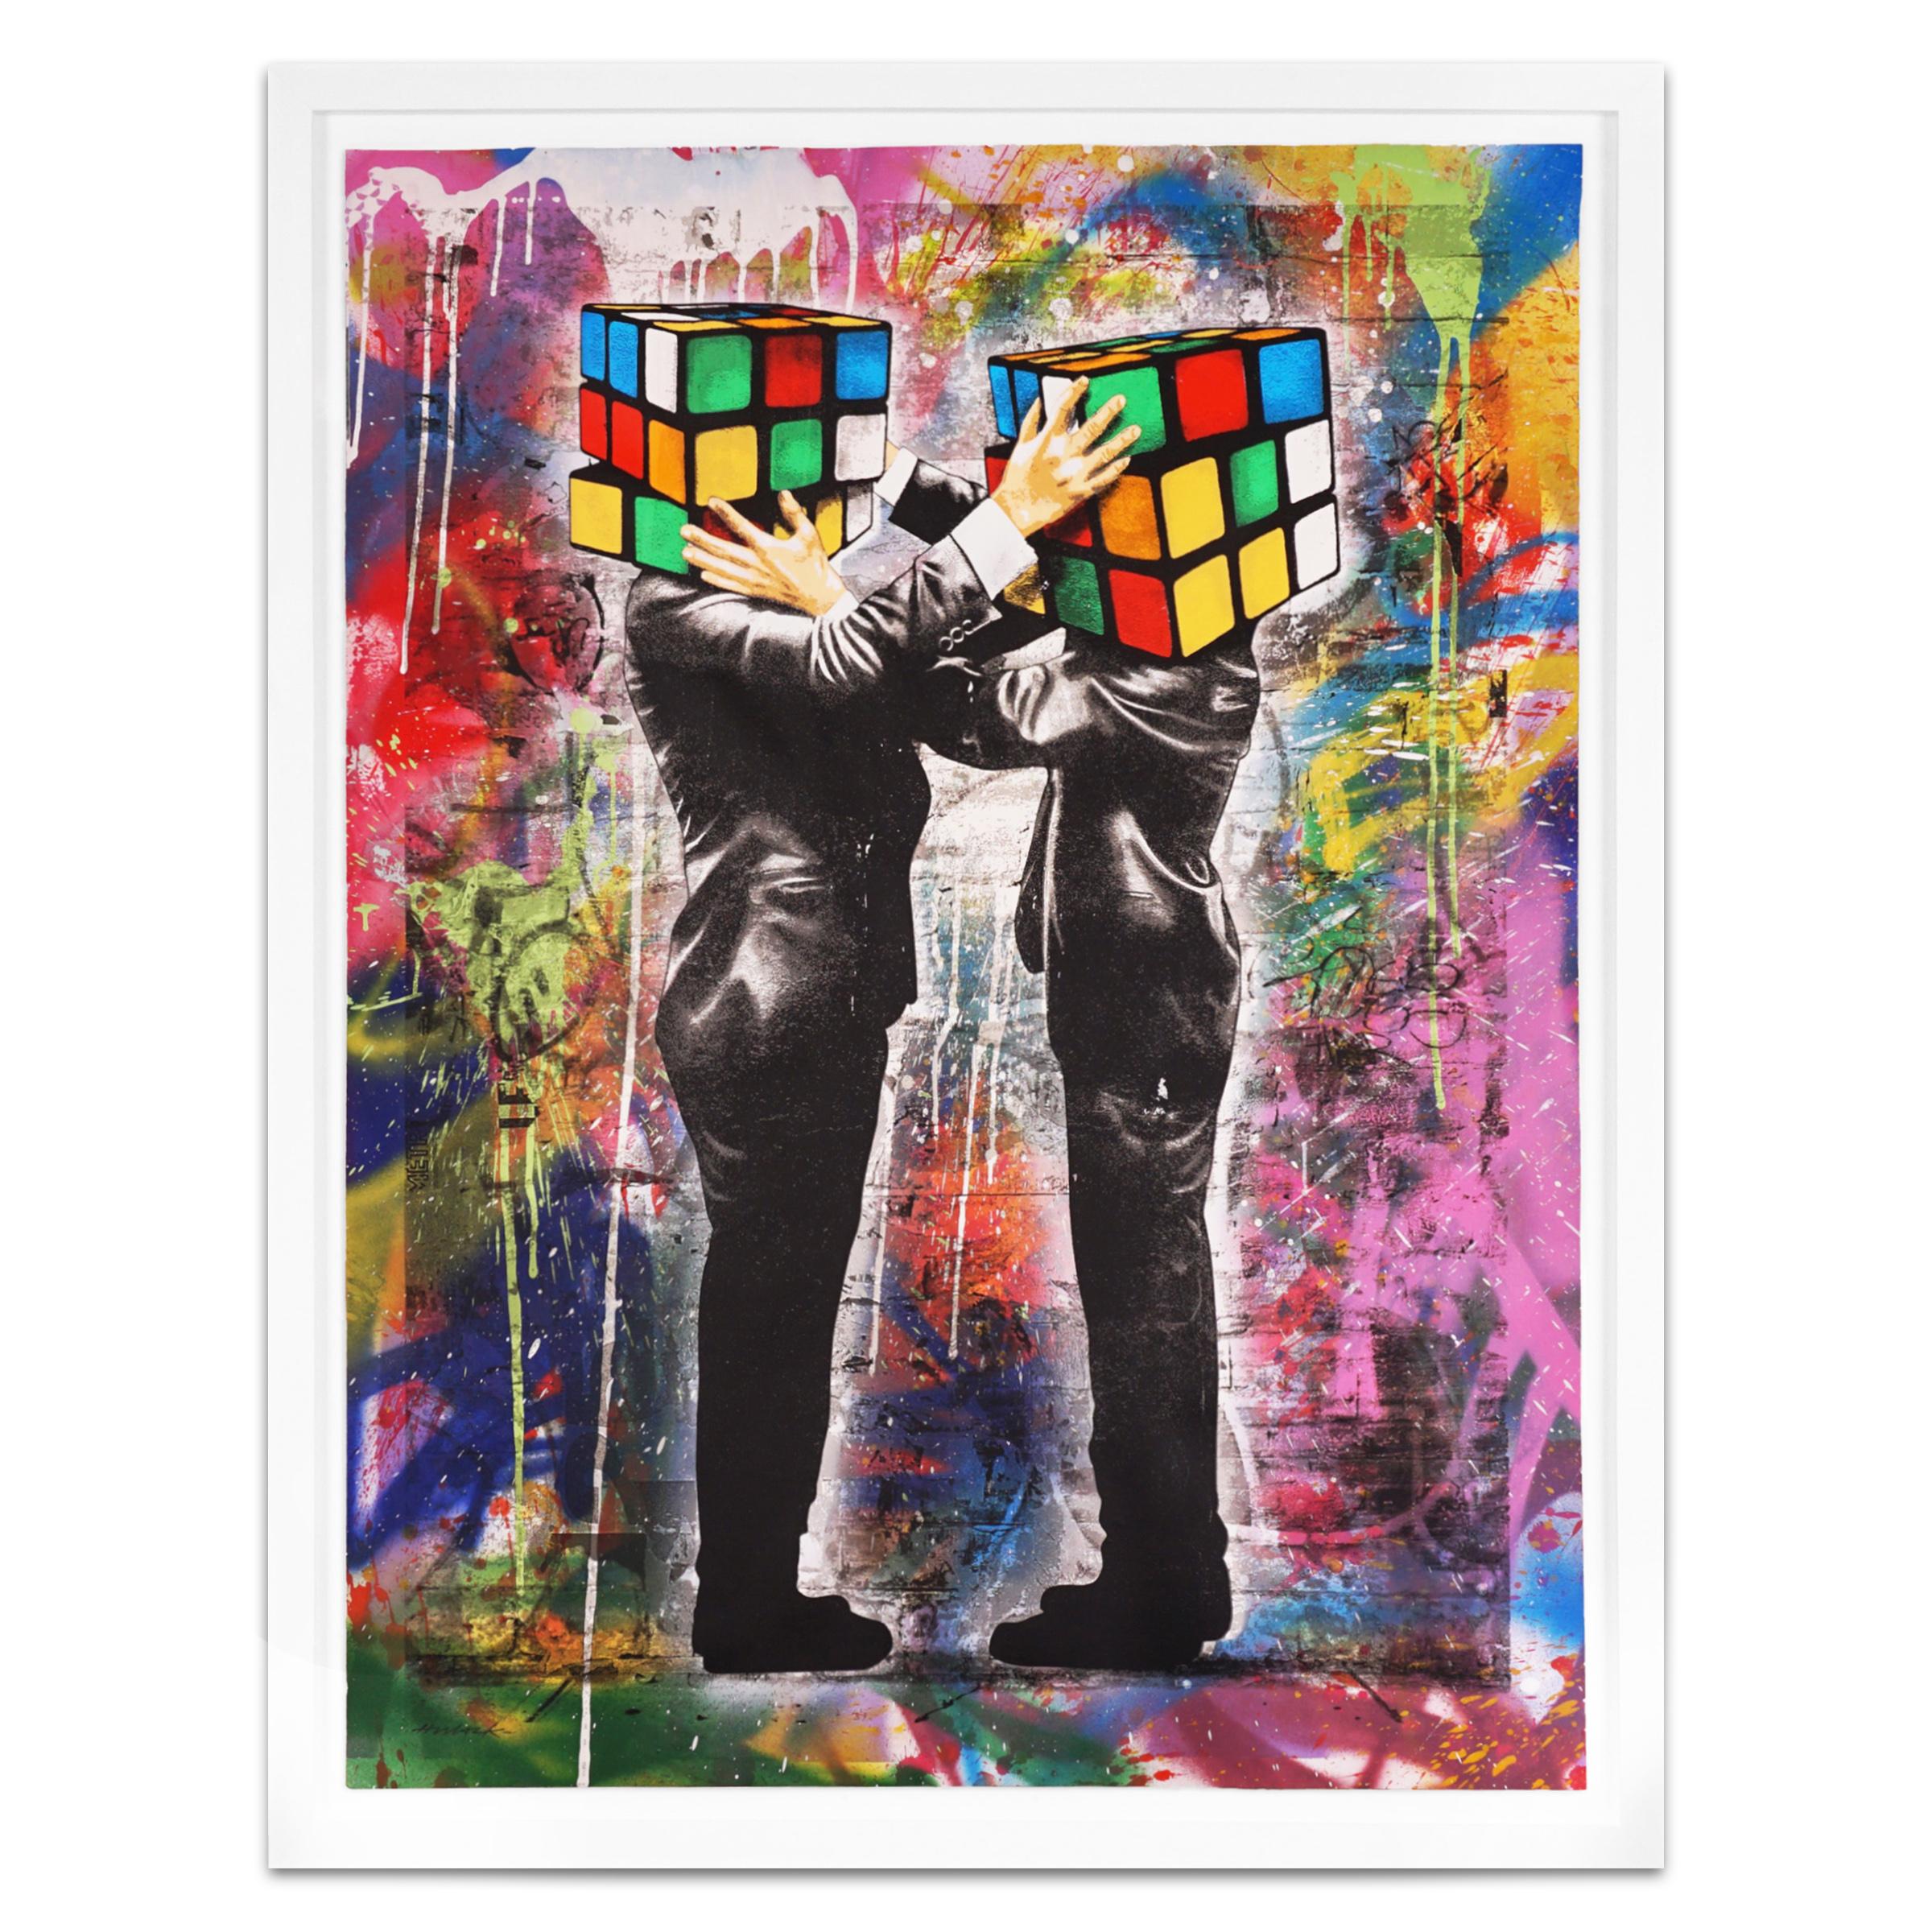 Hijack, 'Puzzled III' Unique Street Pop Art Painting, 2021